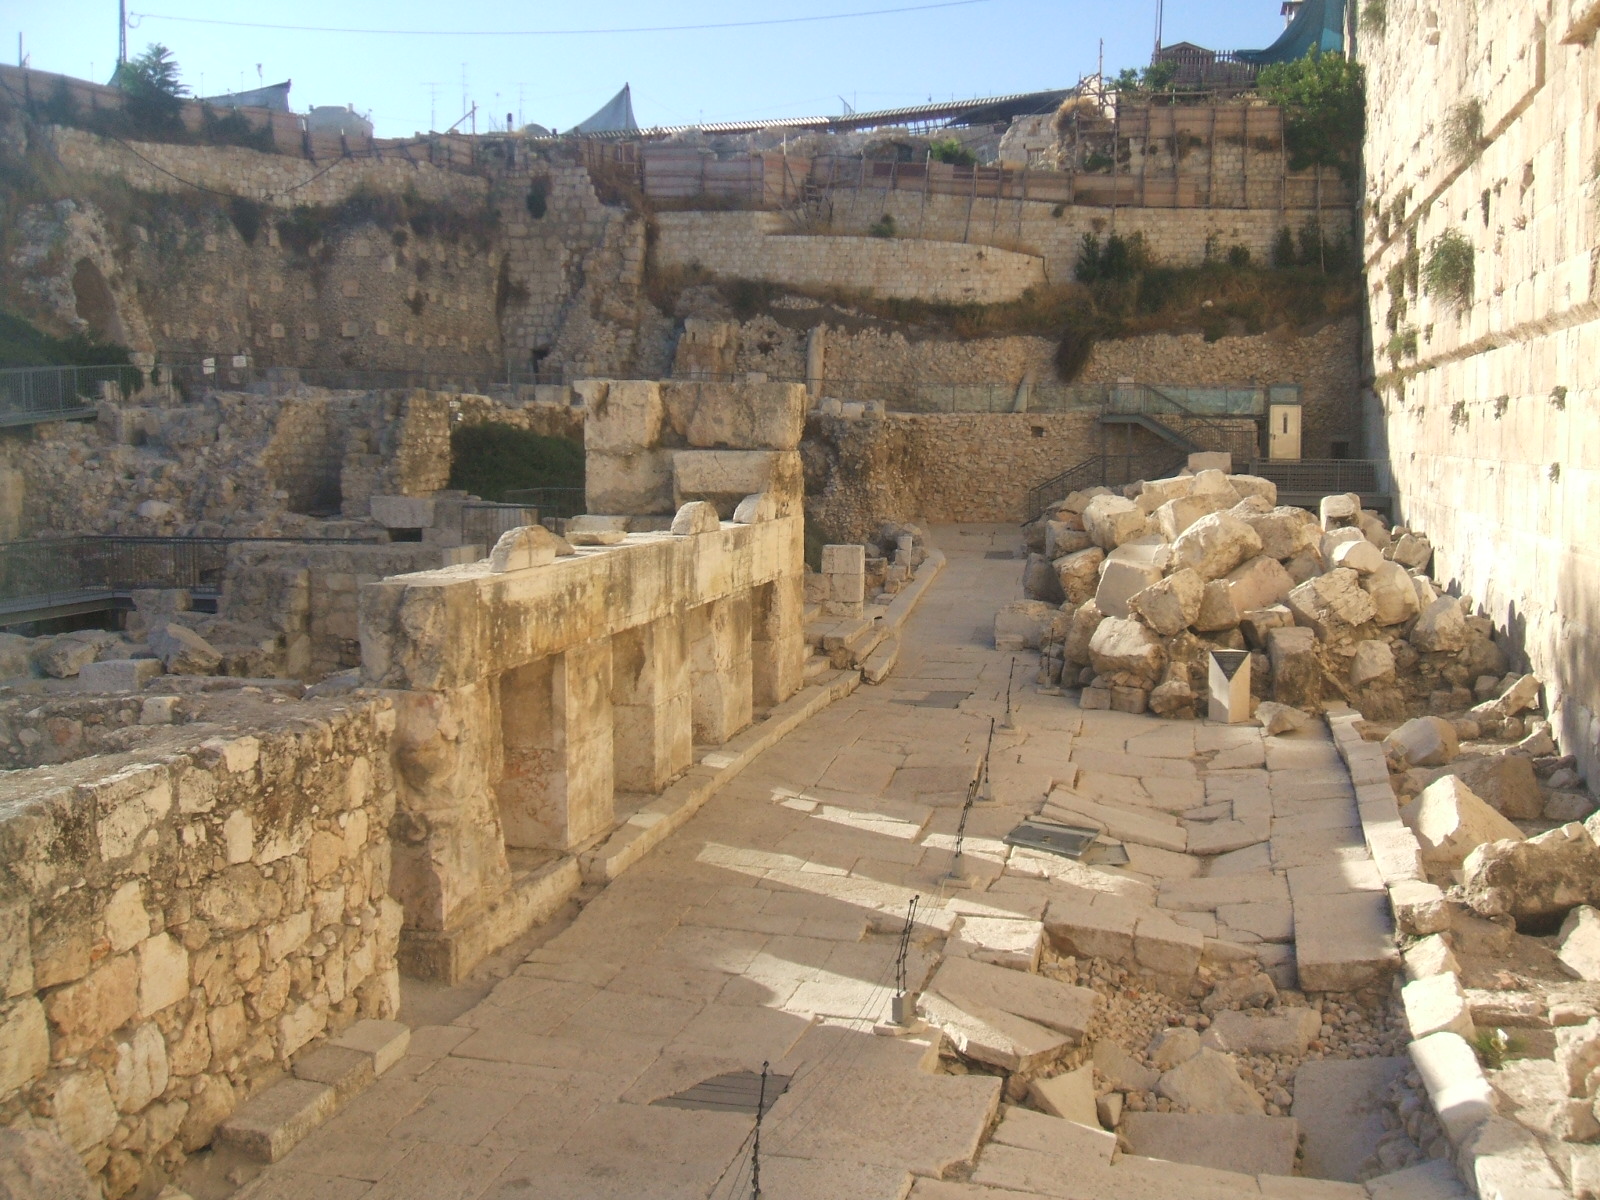 Touch the Old City of Jerusalem